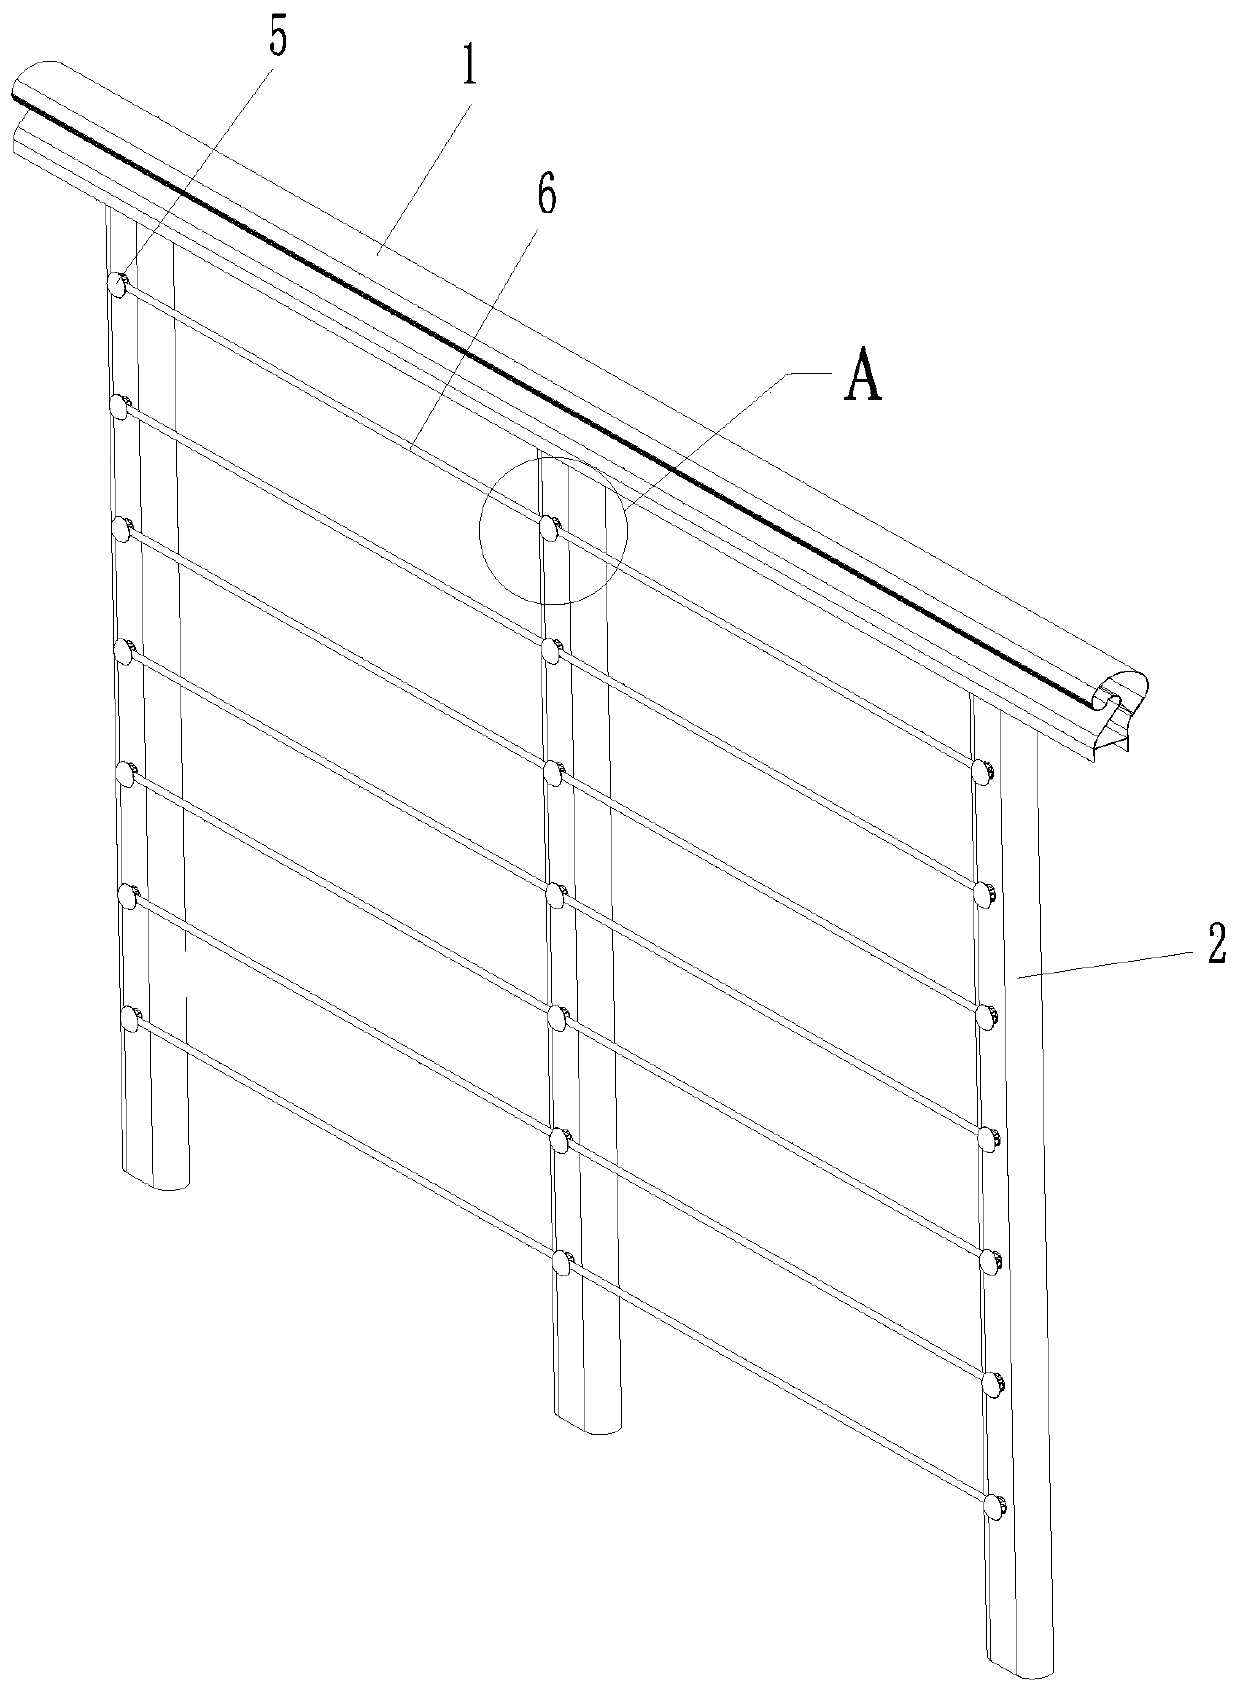 Assembled handrail